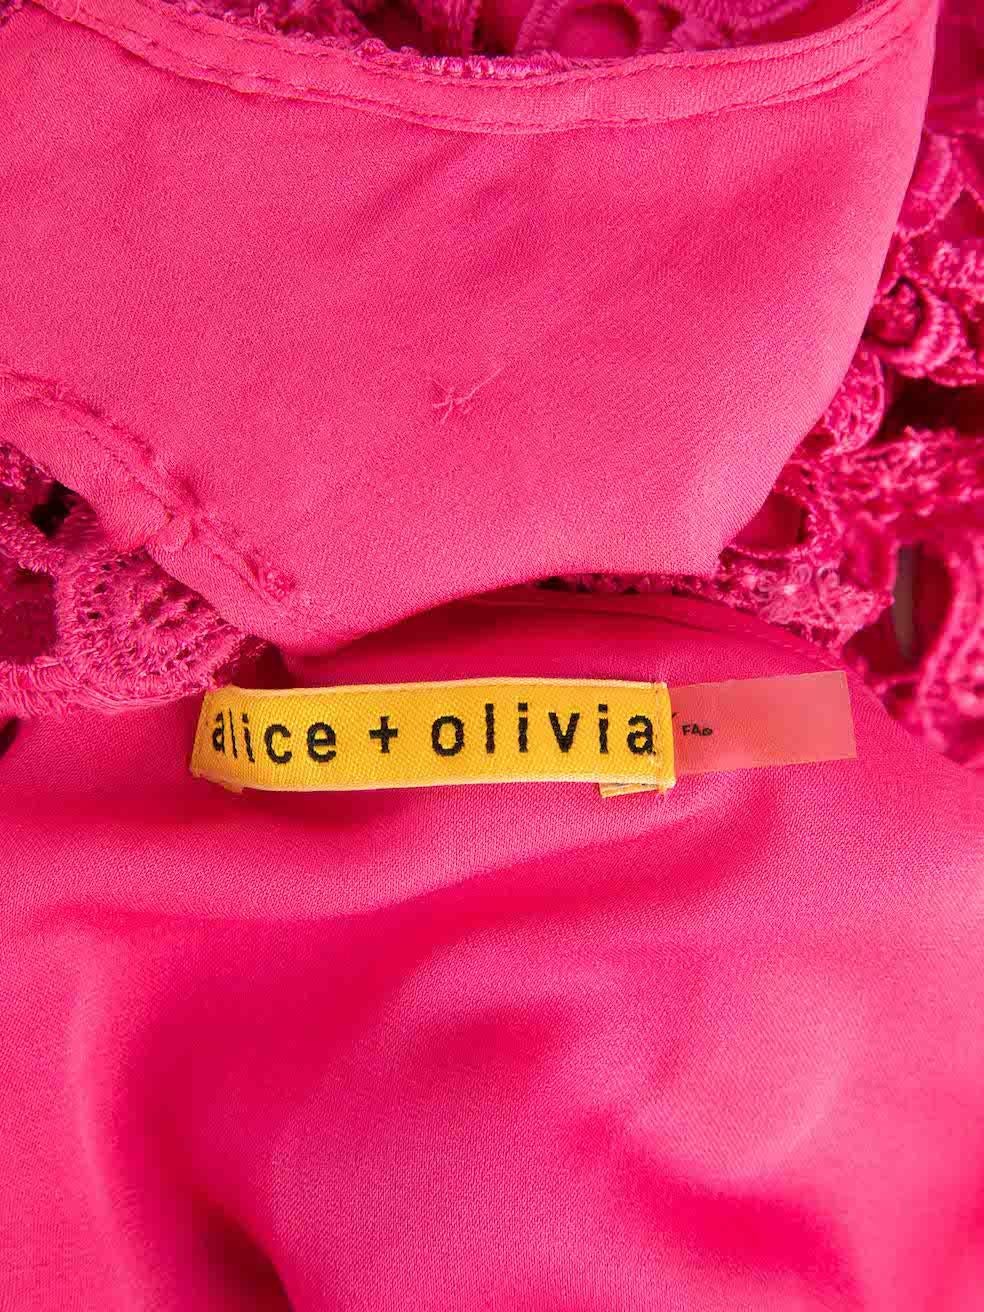 Alice & Olivia Women's Pink Lace Open Back Mini Dress 1